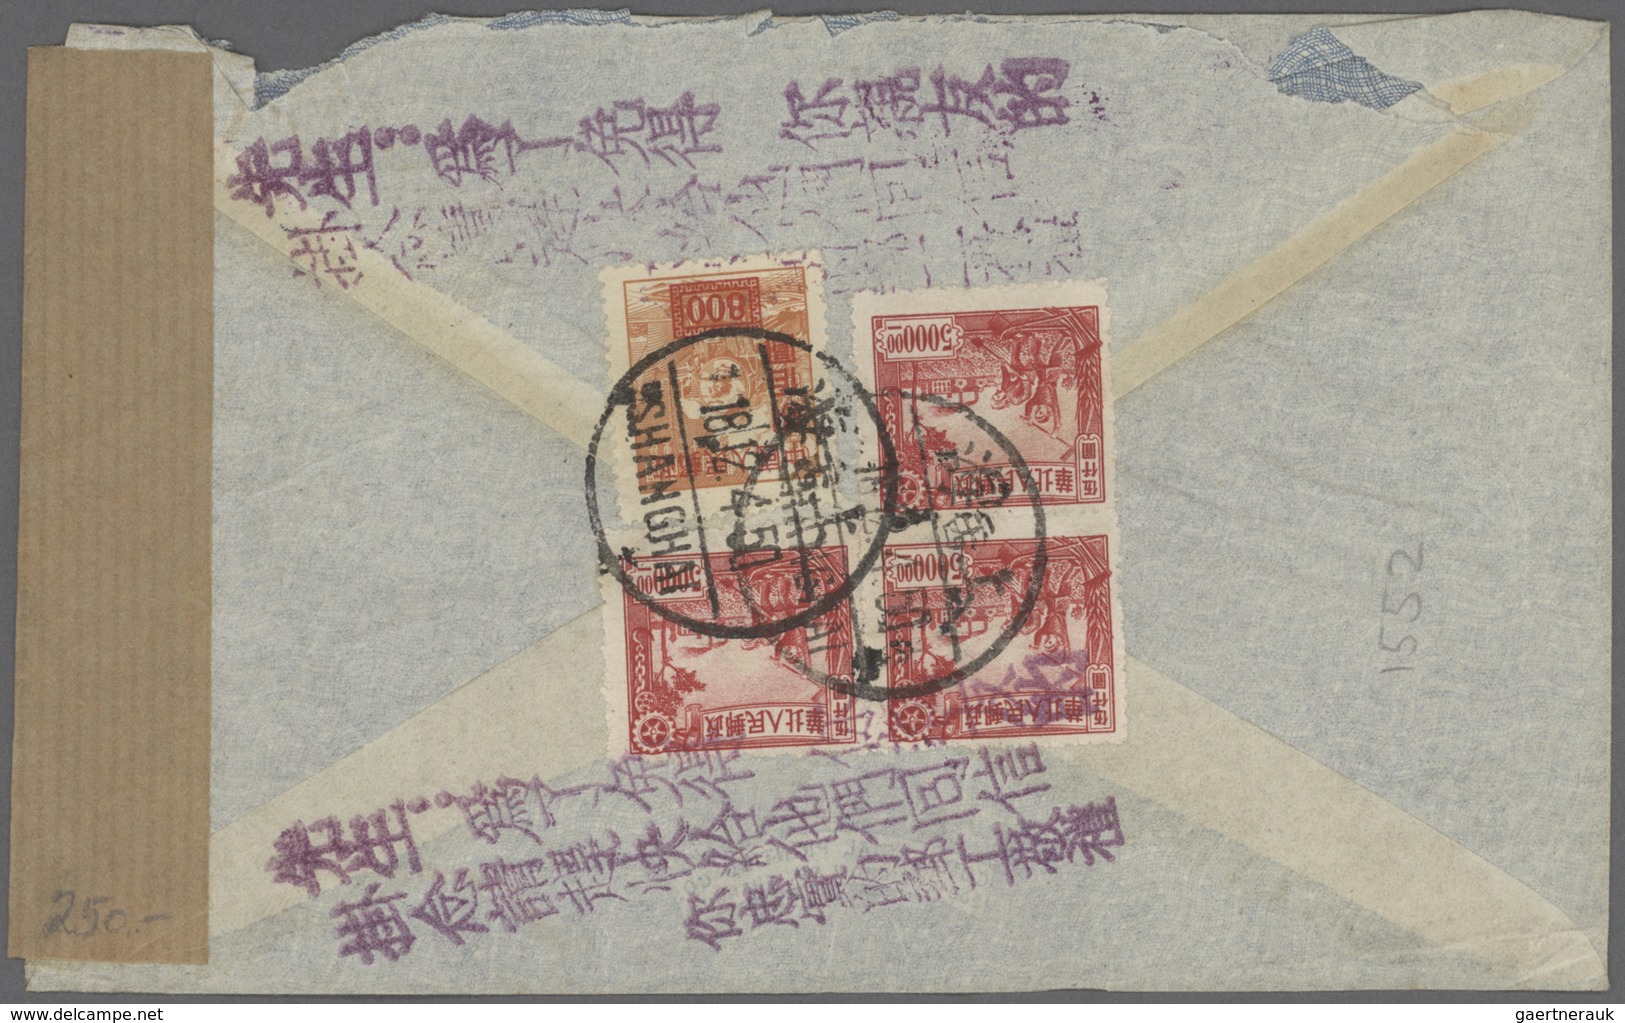 China - Volksrepublik - Provinzen: North China, "North China People's Post", 1949, larger selection